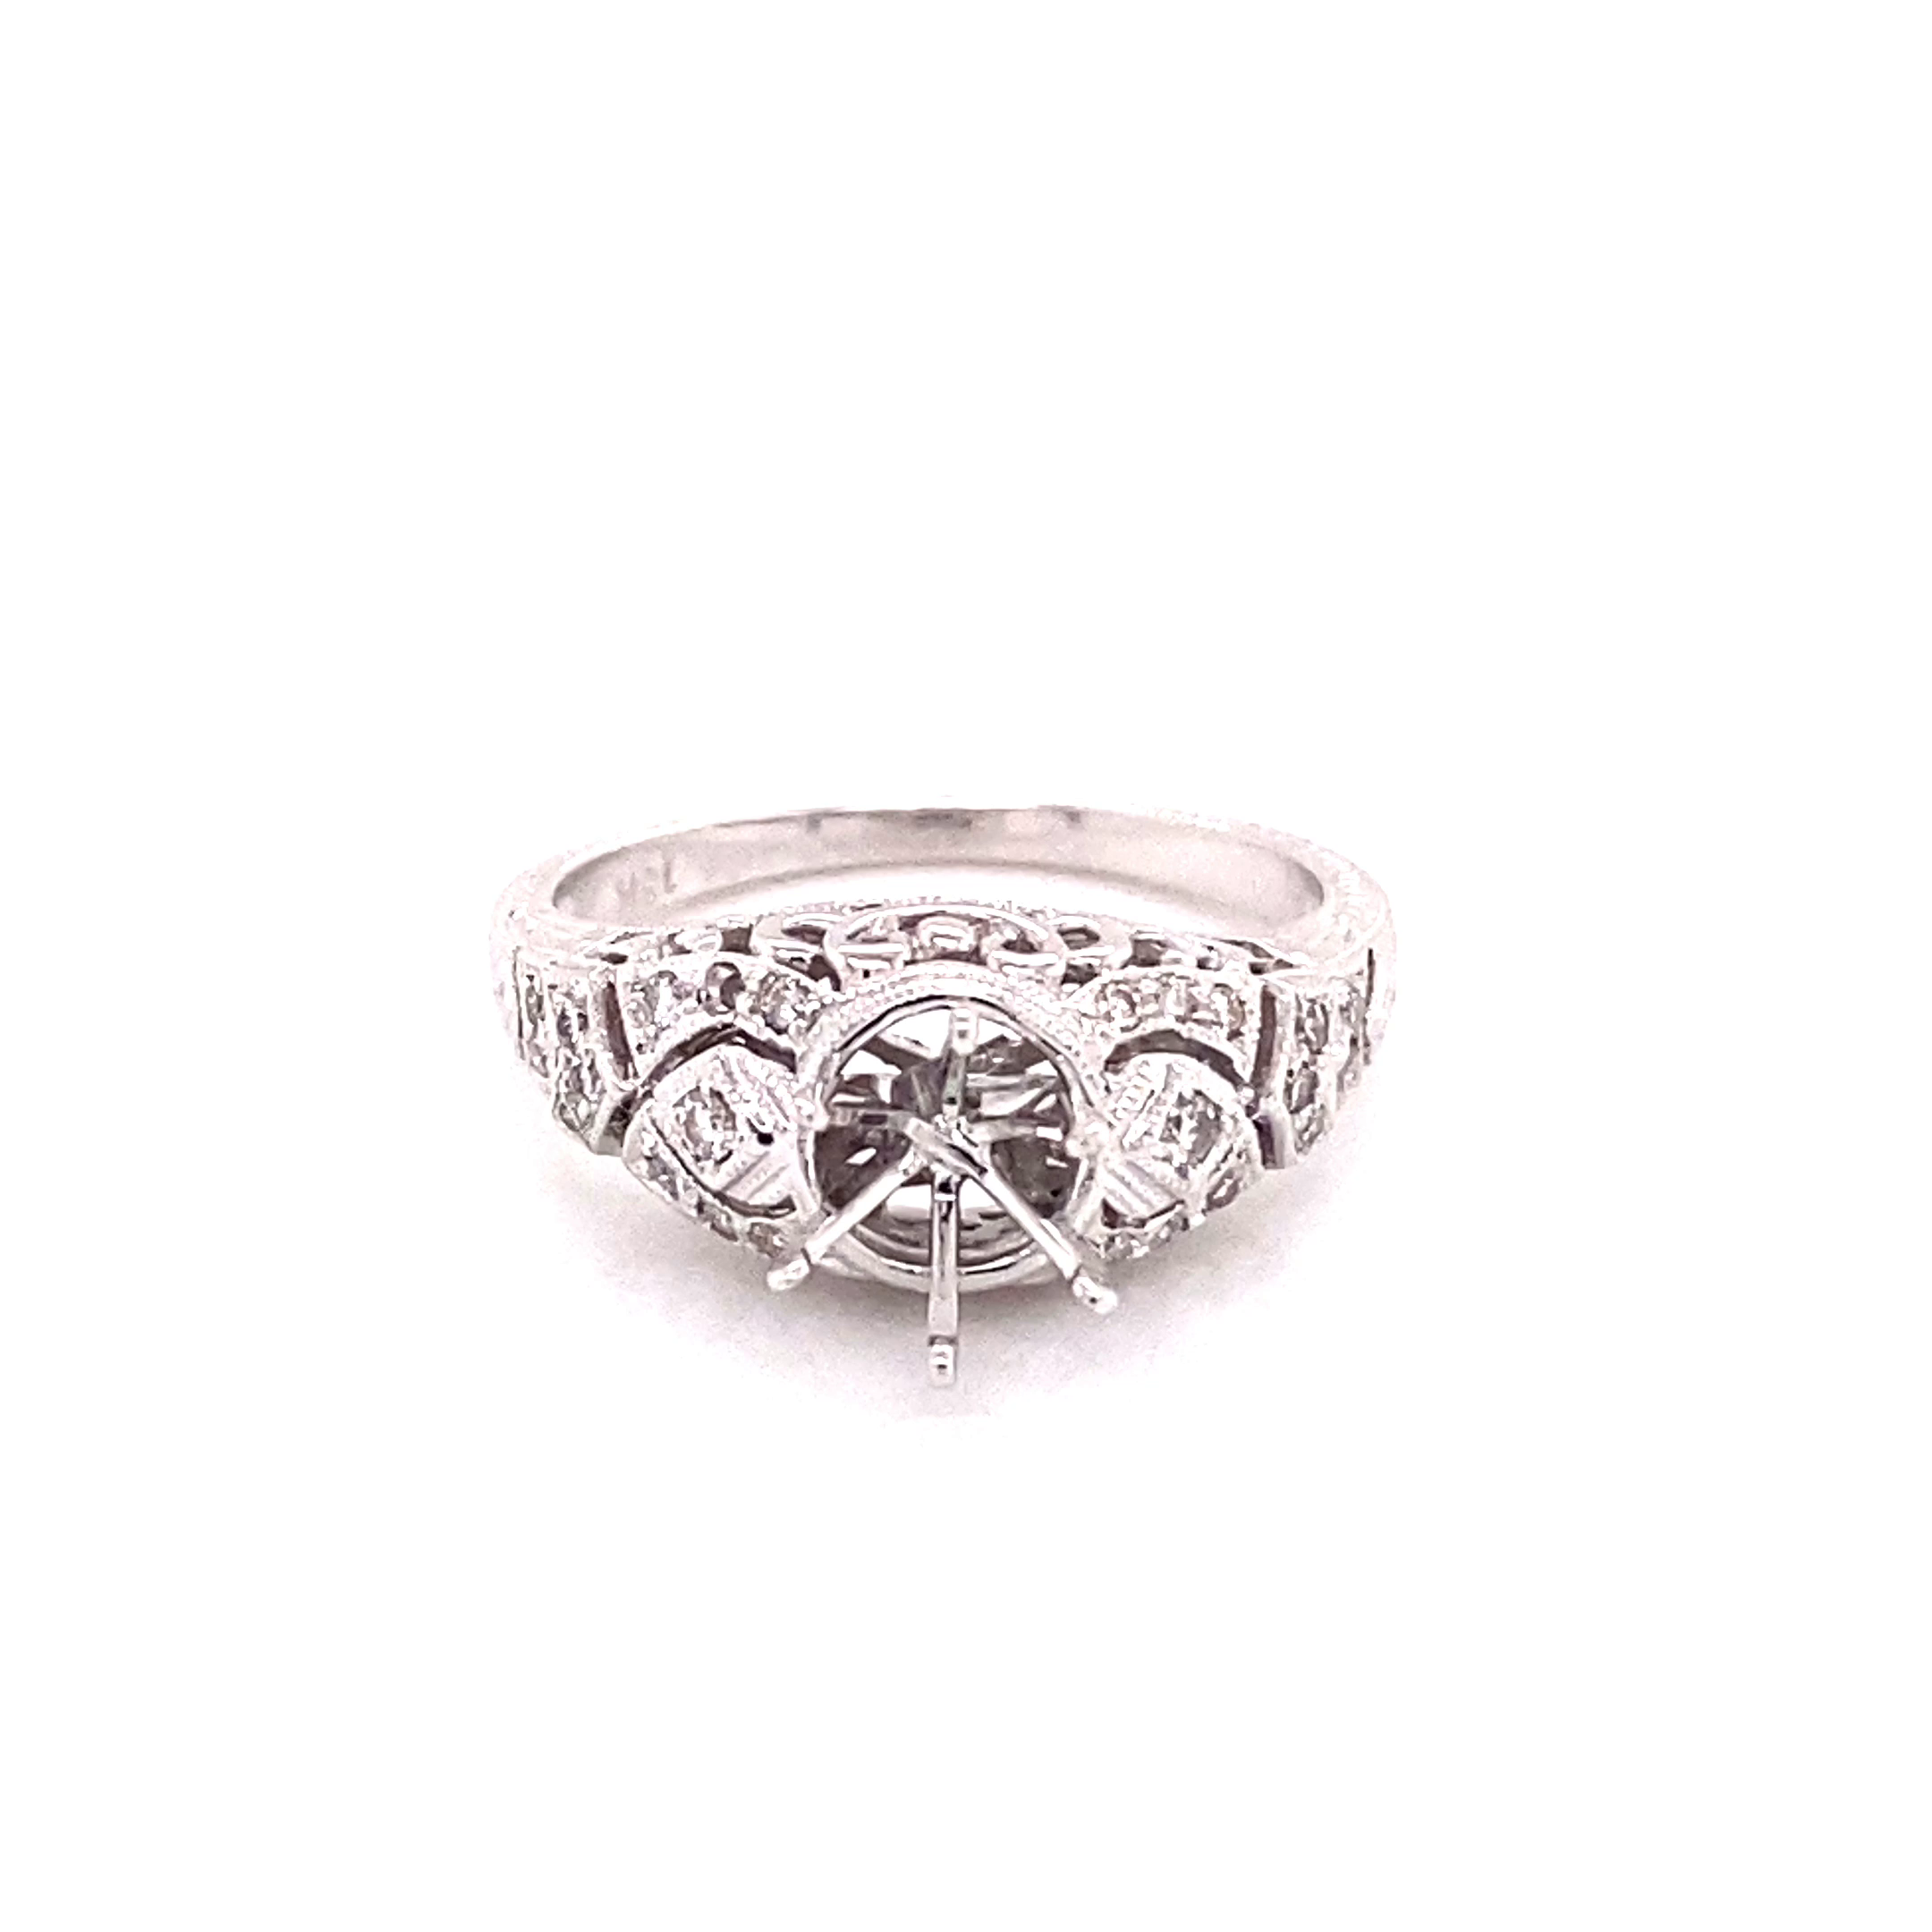 Platinum Ring with Diamonds, an Art Deco Setting Head